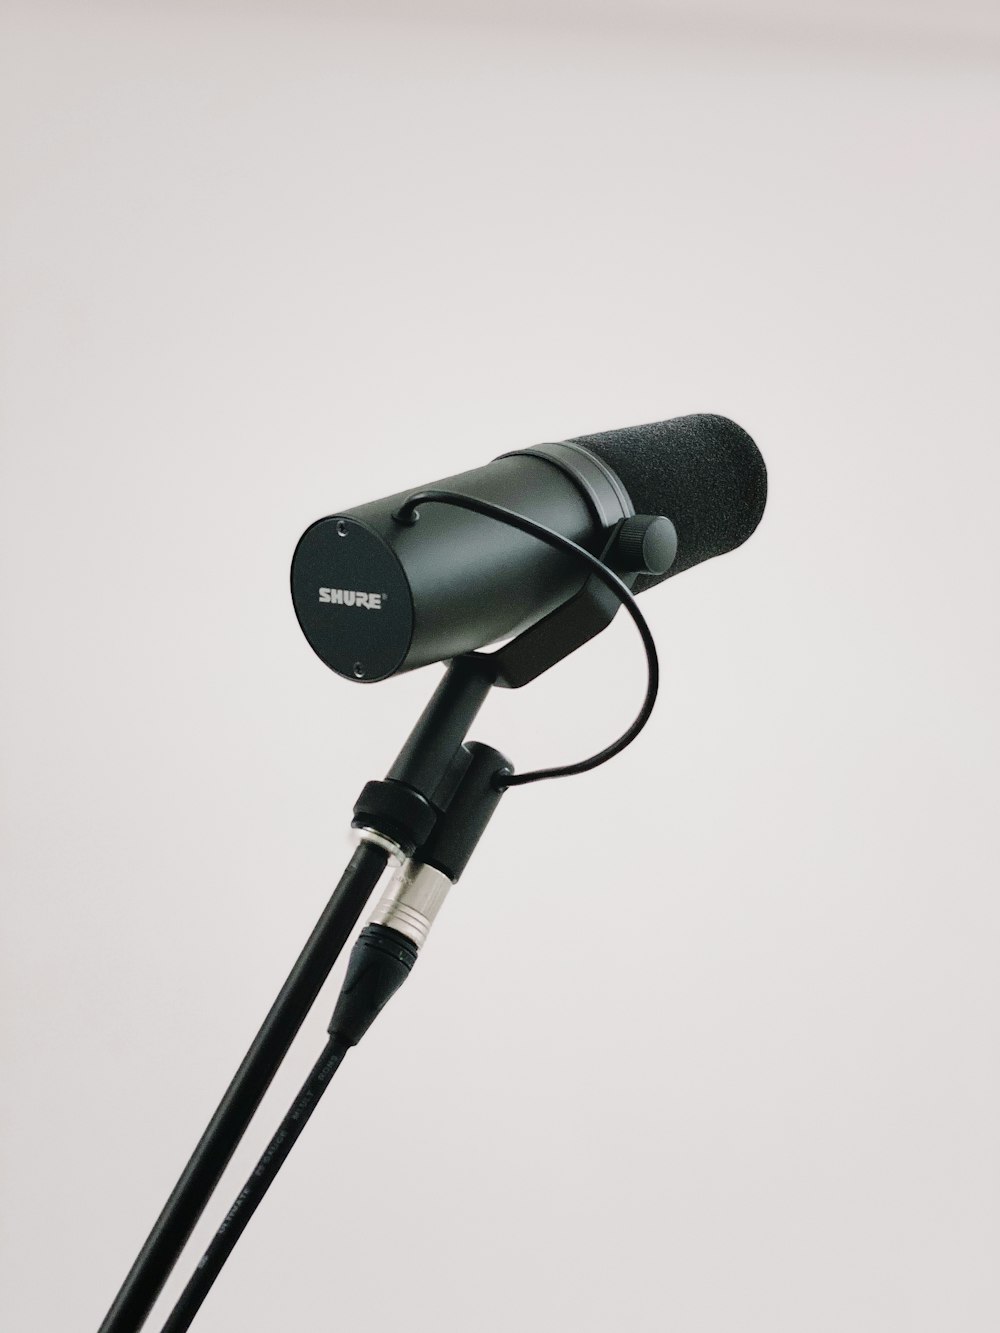 Micrófono negro con soporte sobre fondo blanco